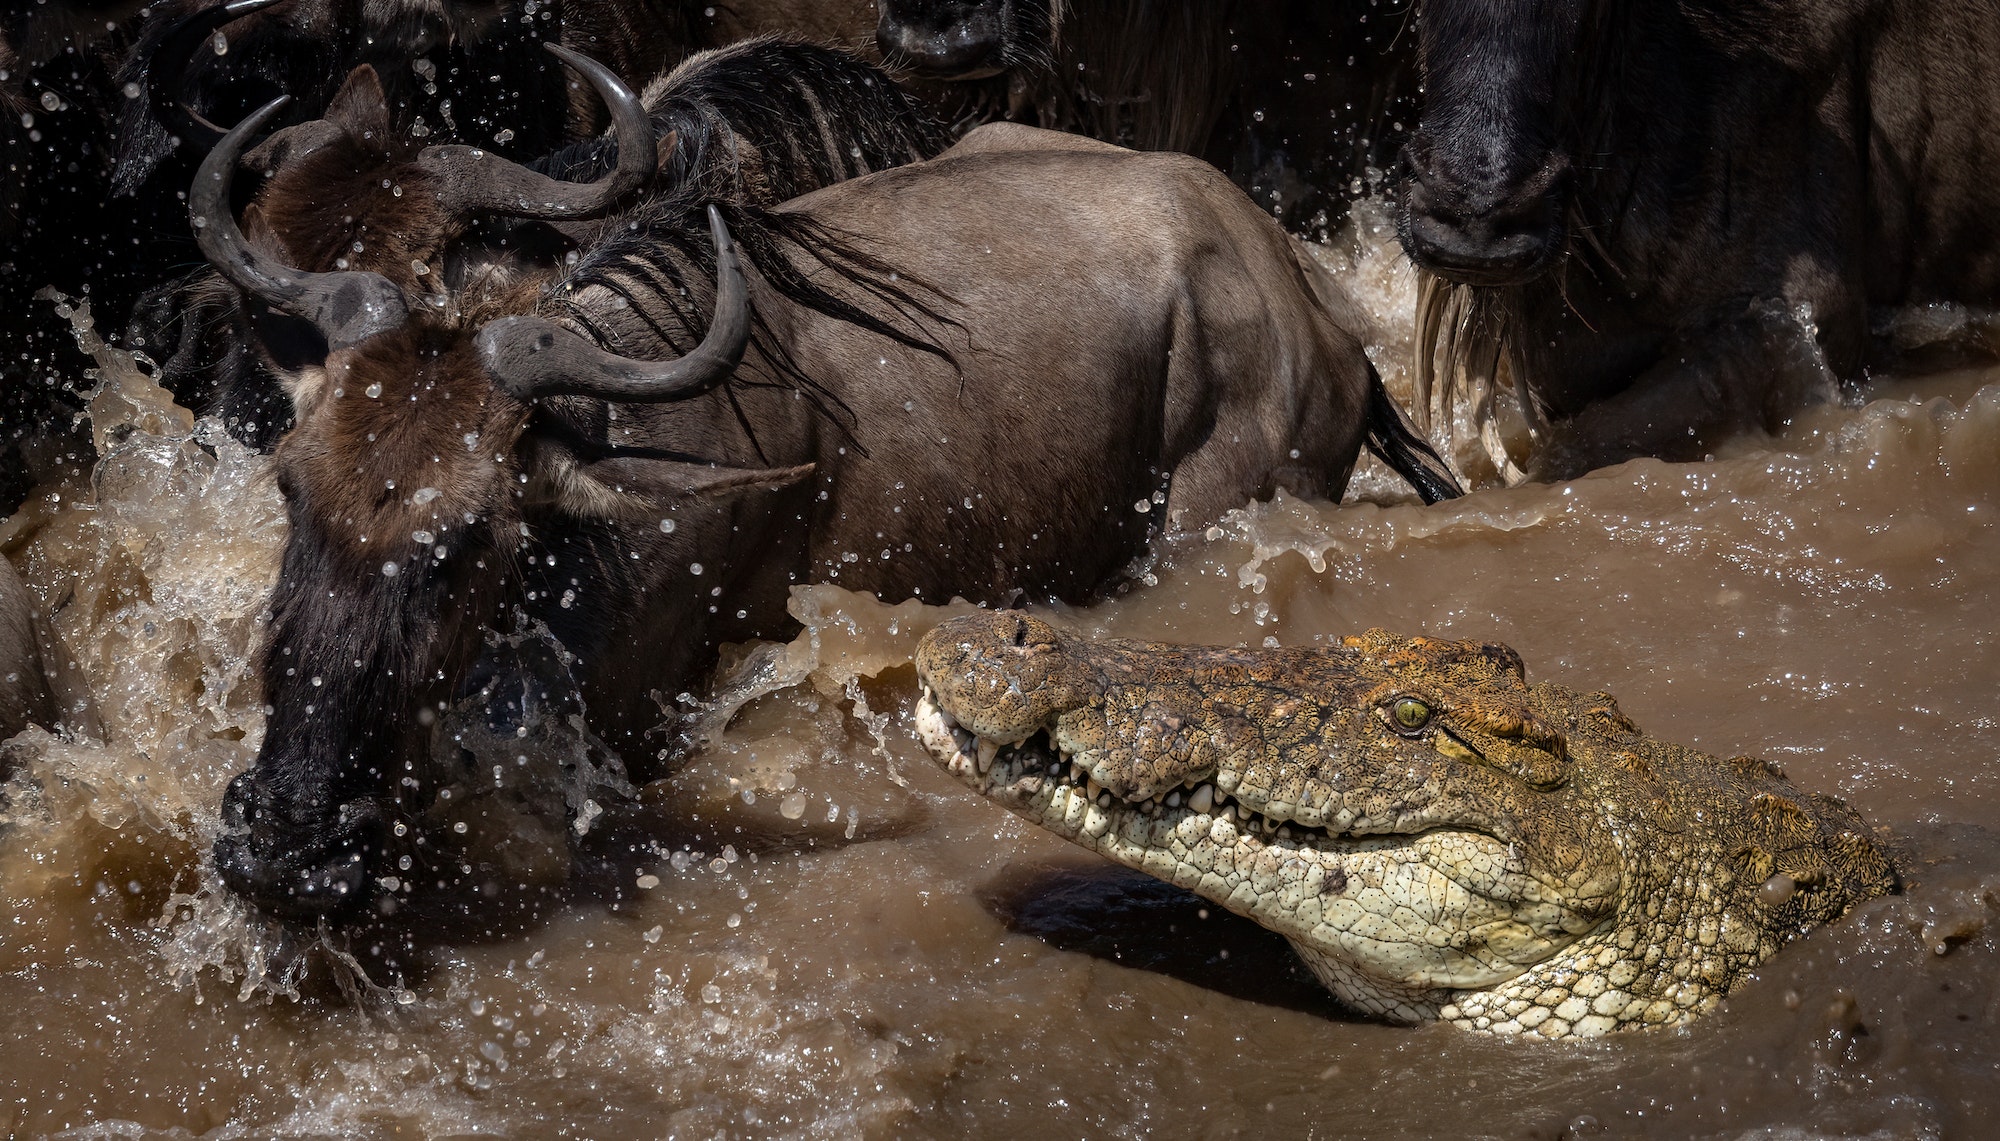 Crocodile Chasing Wildebeest in Africa